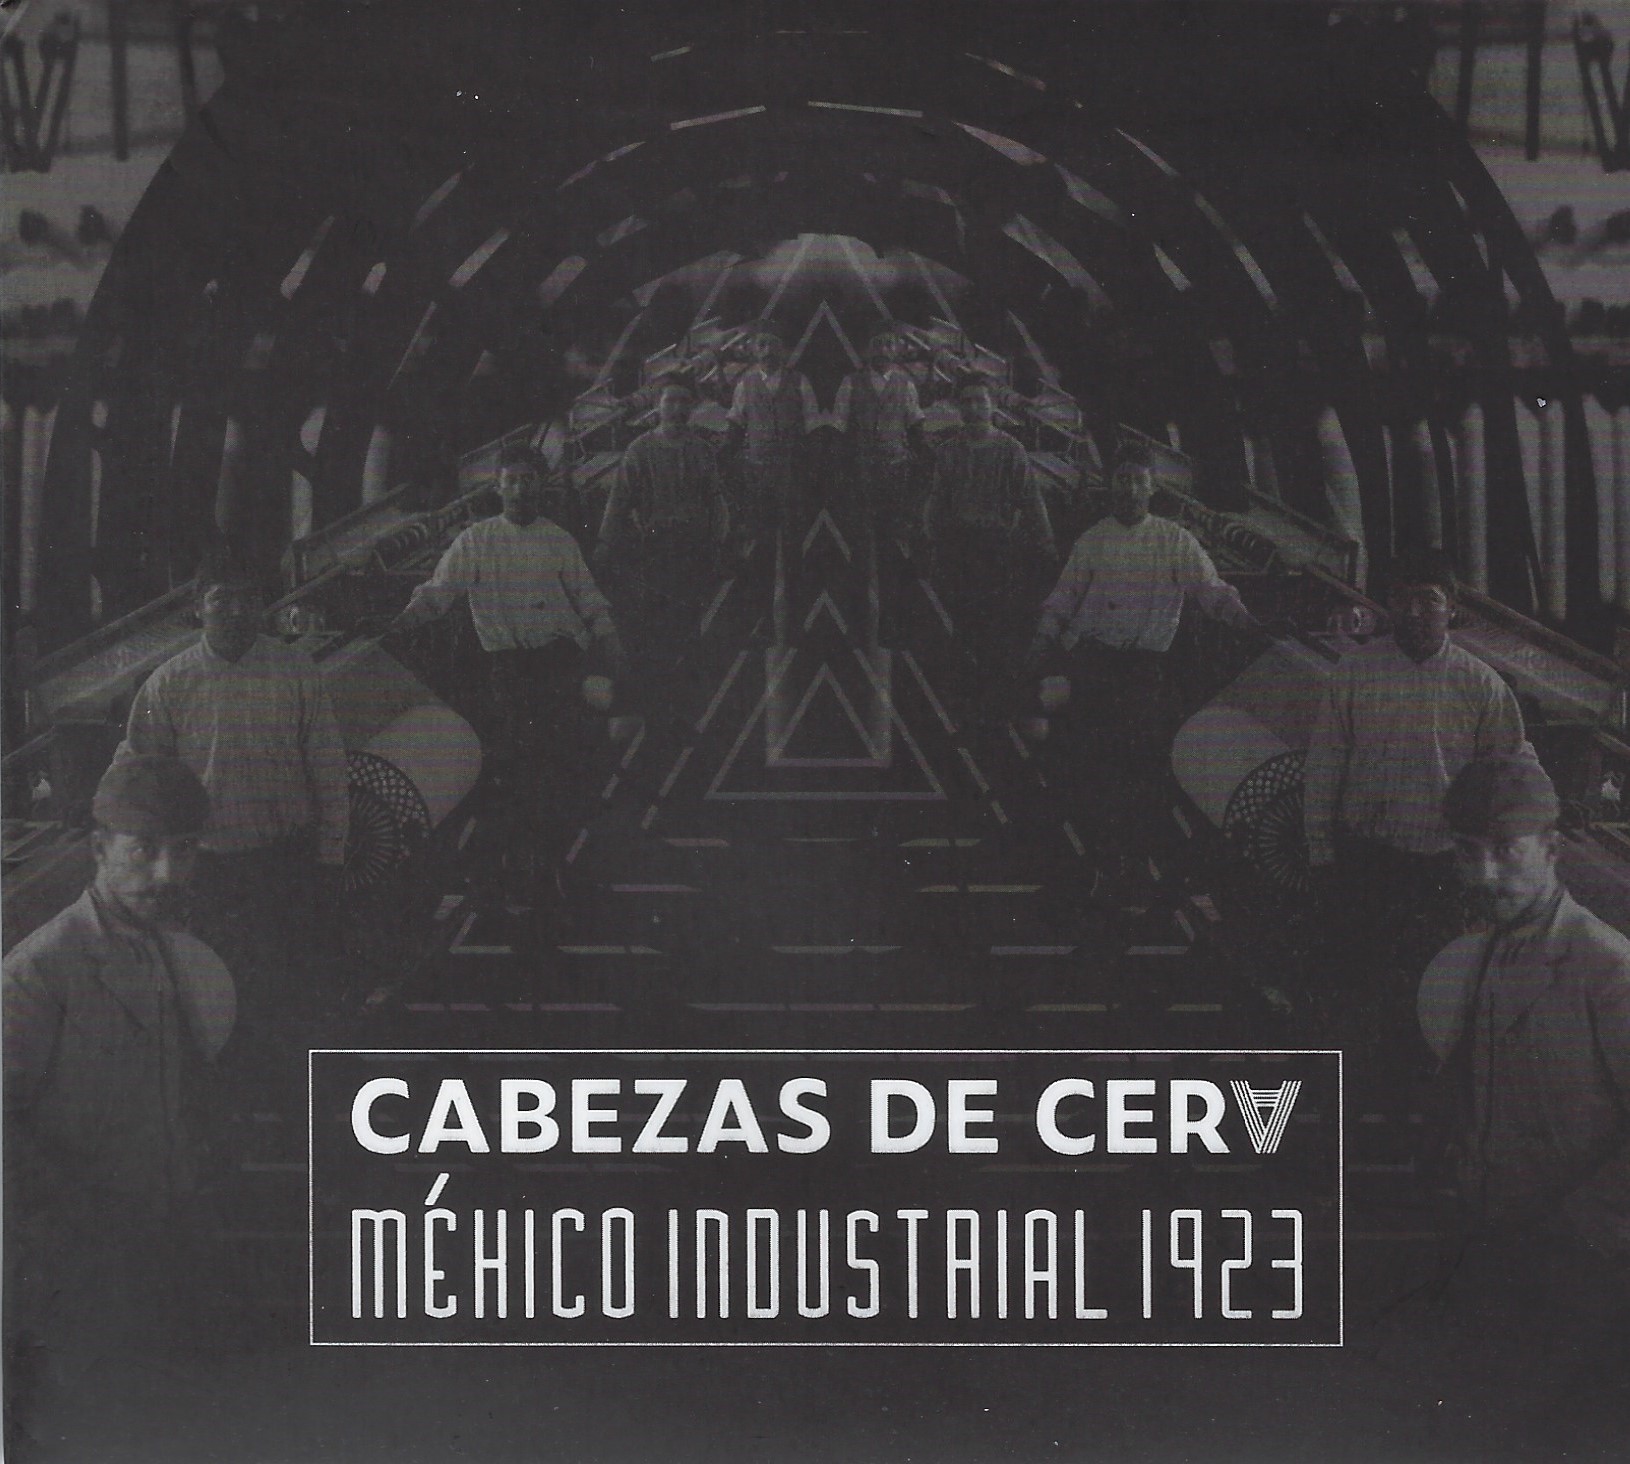 México Industrial 1923 Cover art